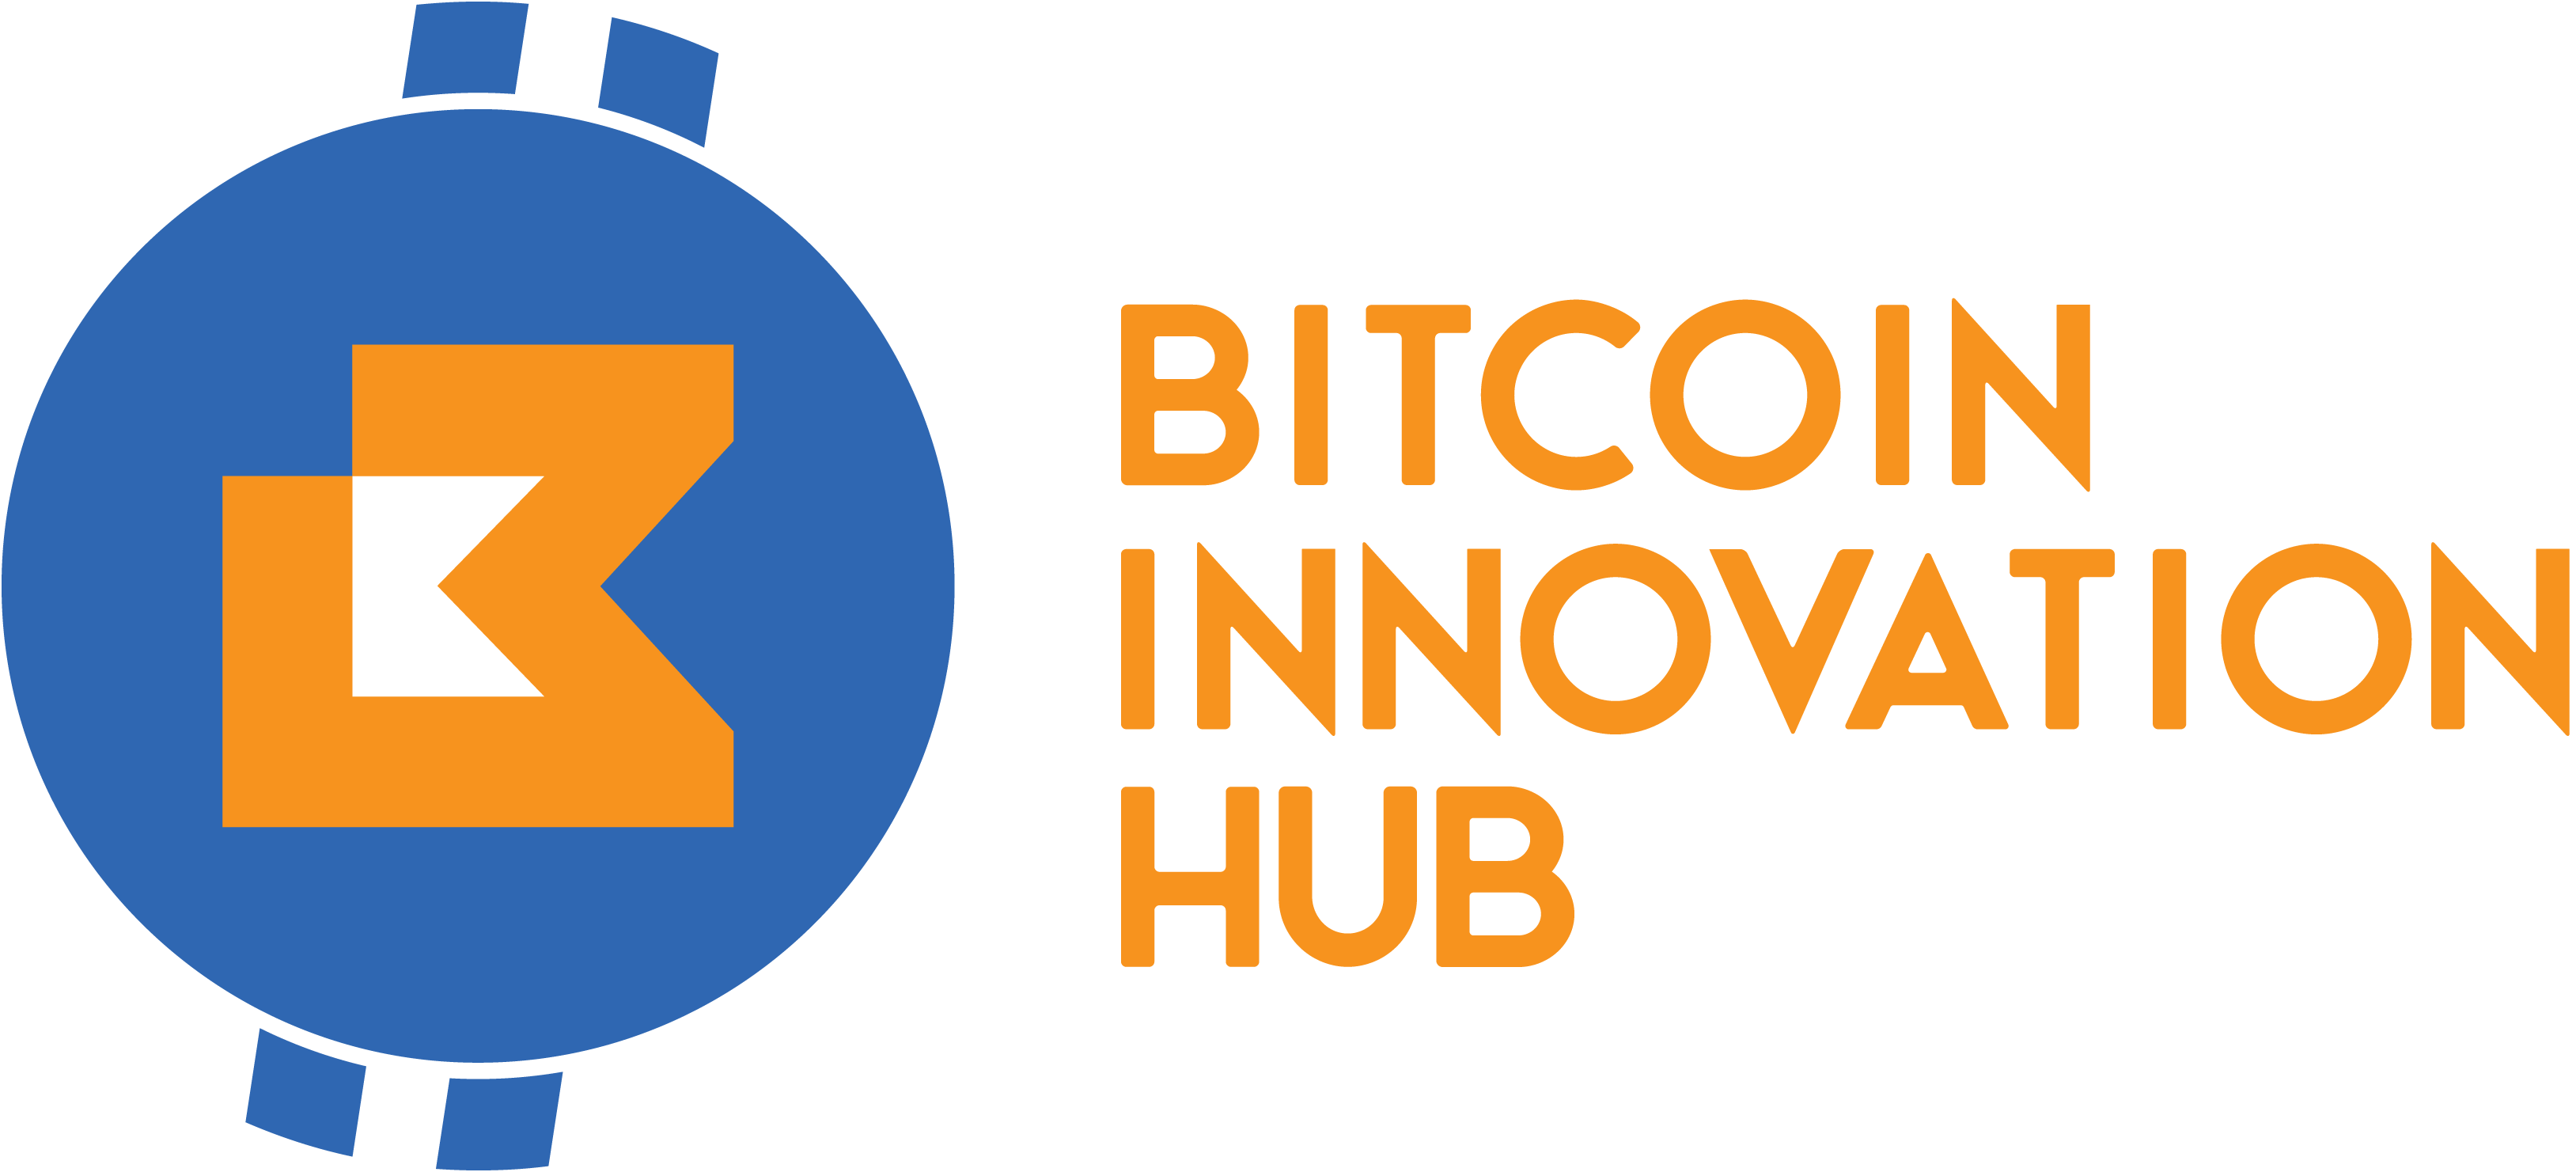 Bitcoin Innovation Hub